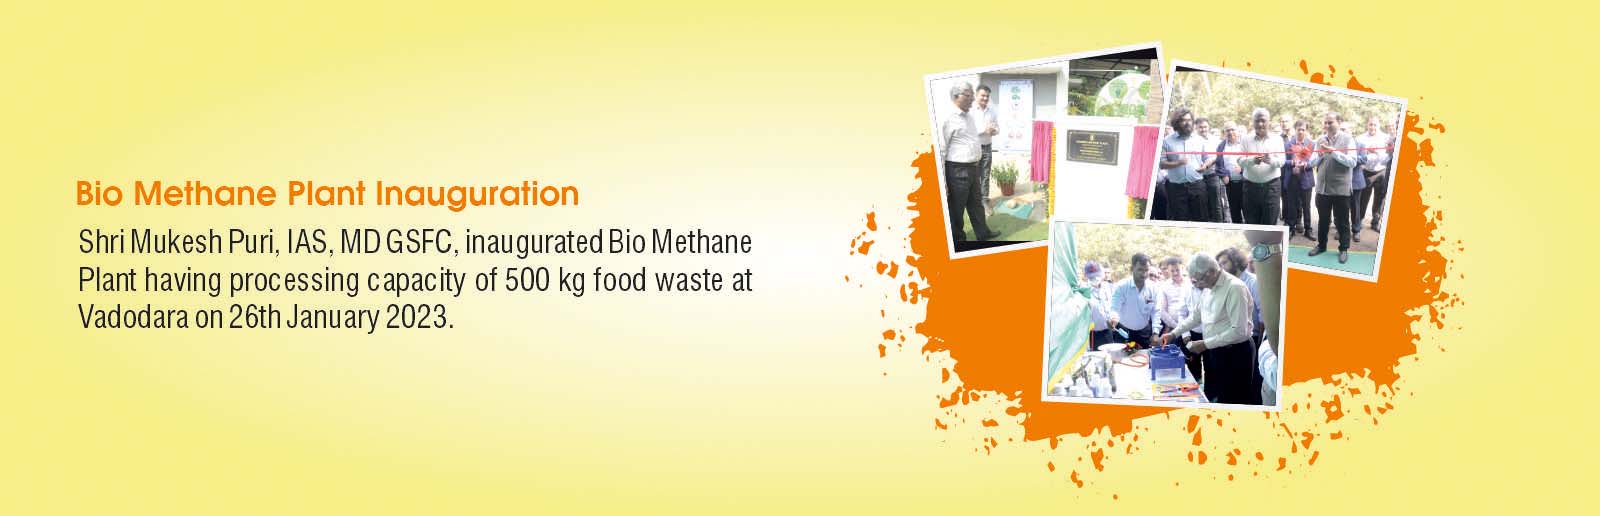 Bio Methane